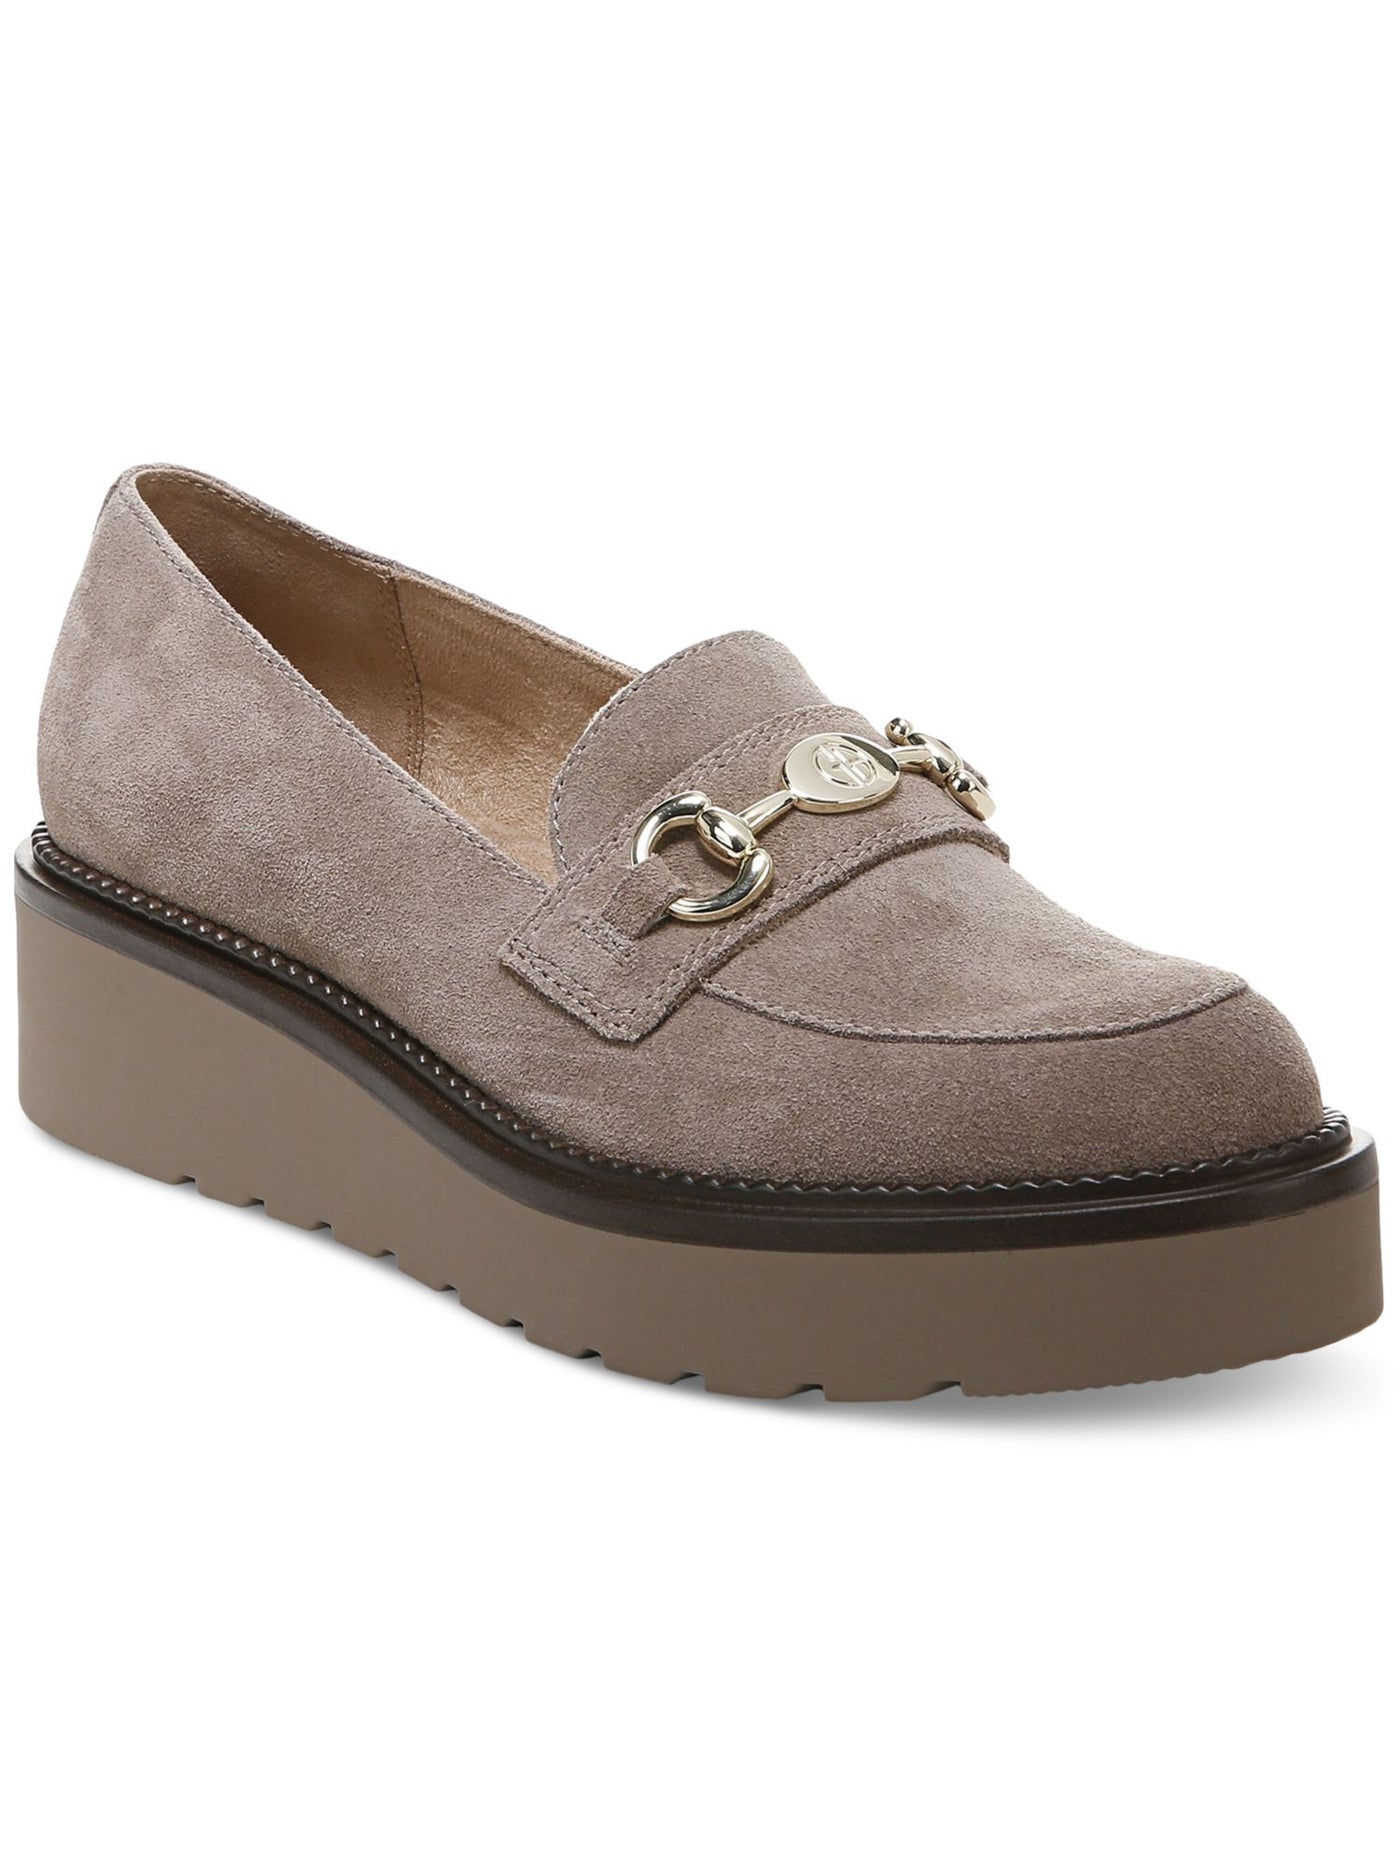 GIANI BERNINI Womens Beige 1-1/2" Platform Comfort Mayaa Round Toe Wedge Slip On Leather Loafers Shoes 10 M